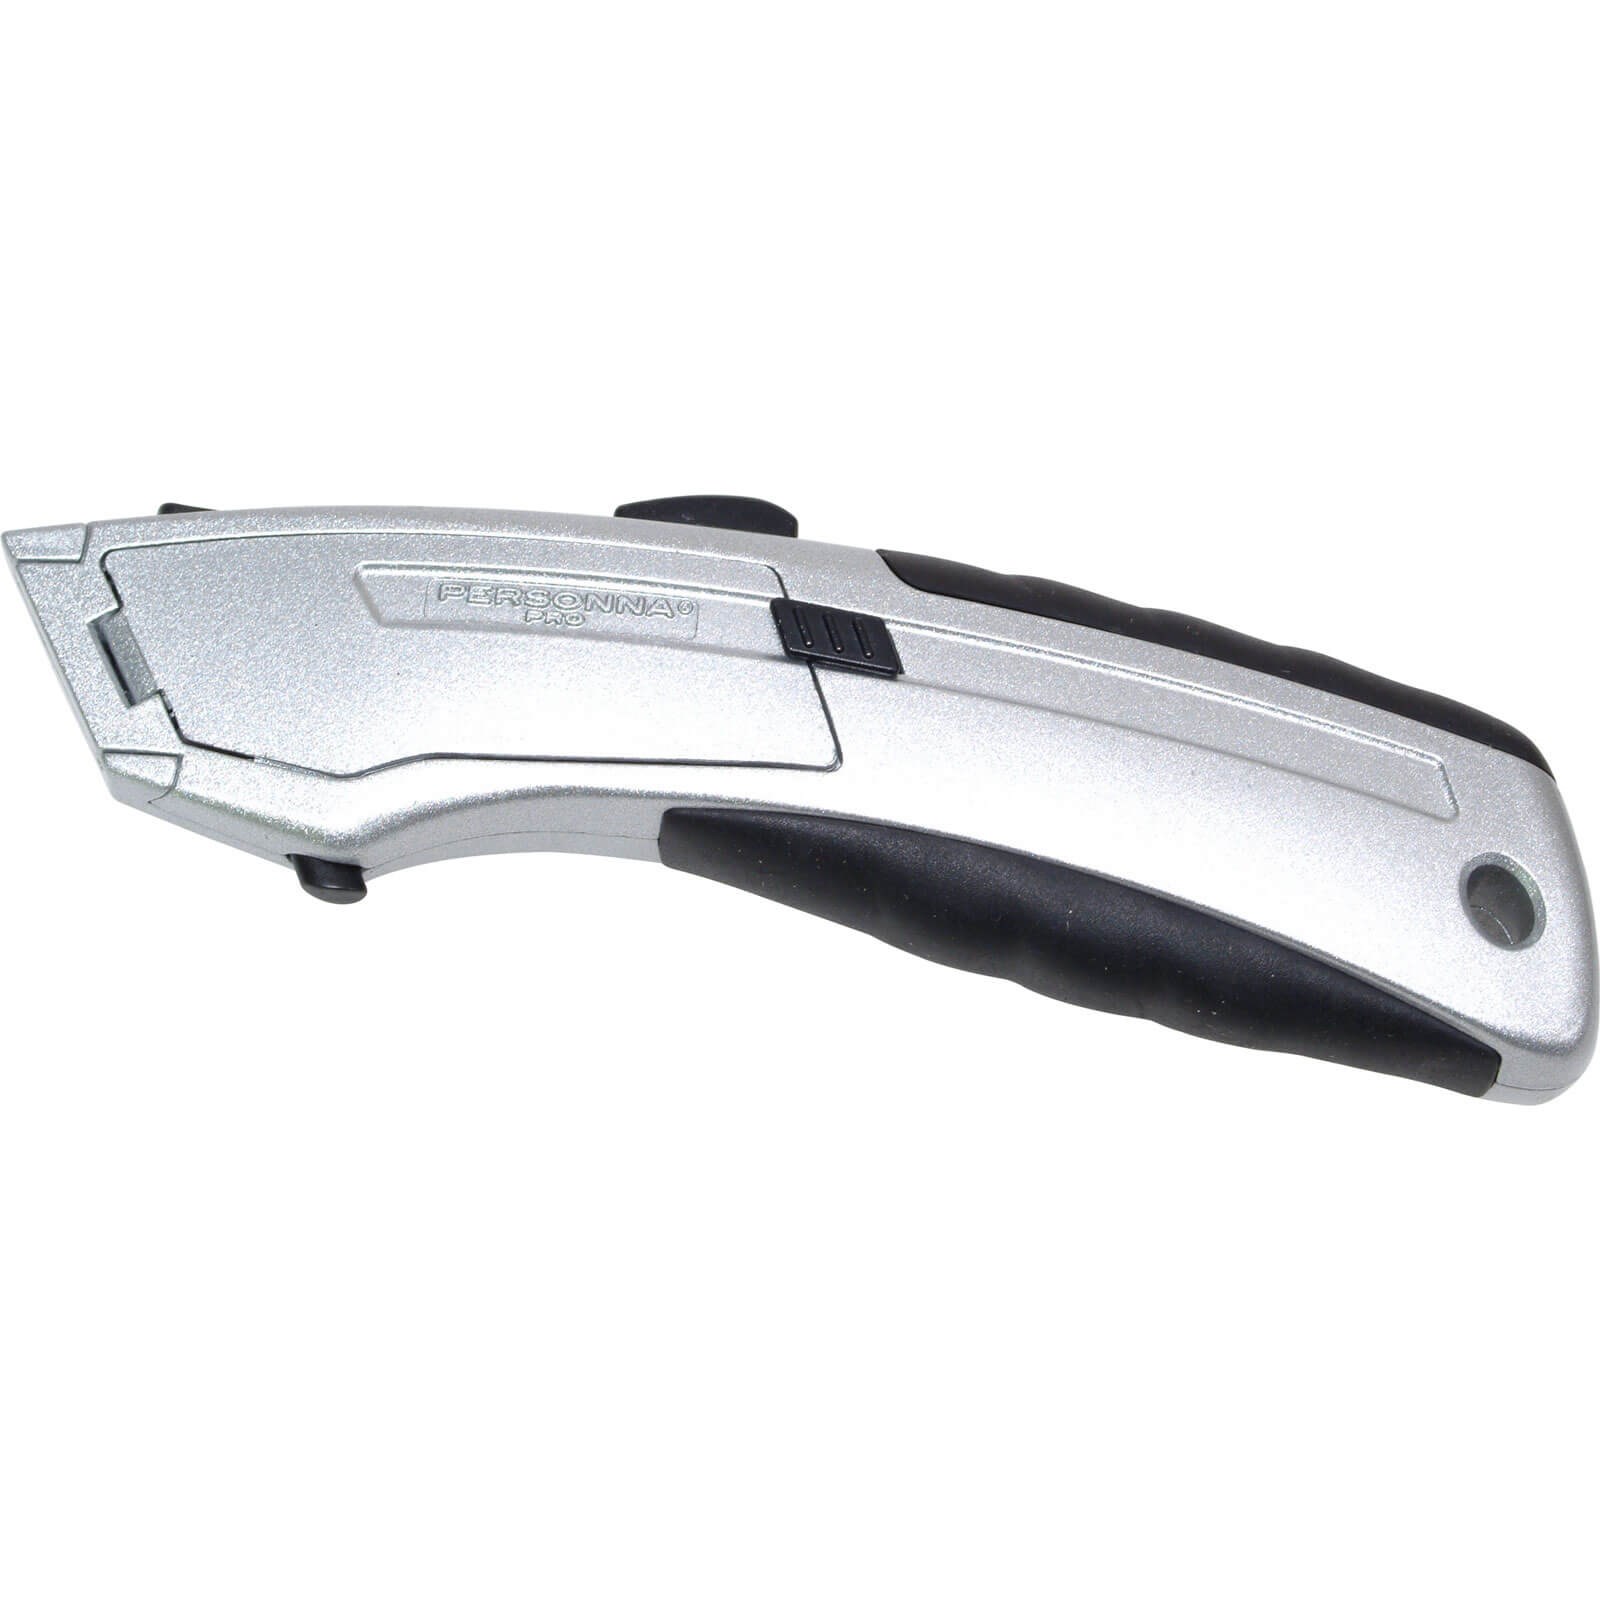 Personna Pro 63-0220 AutoChange Utility Knife